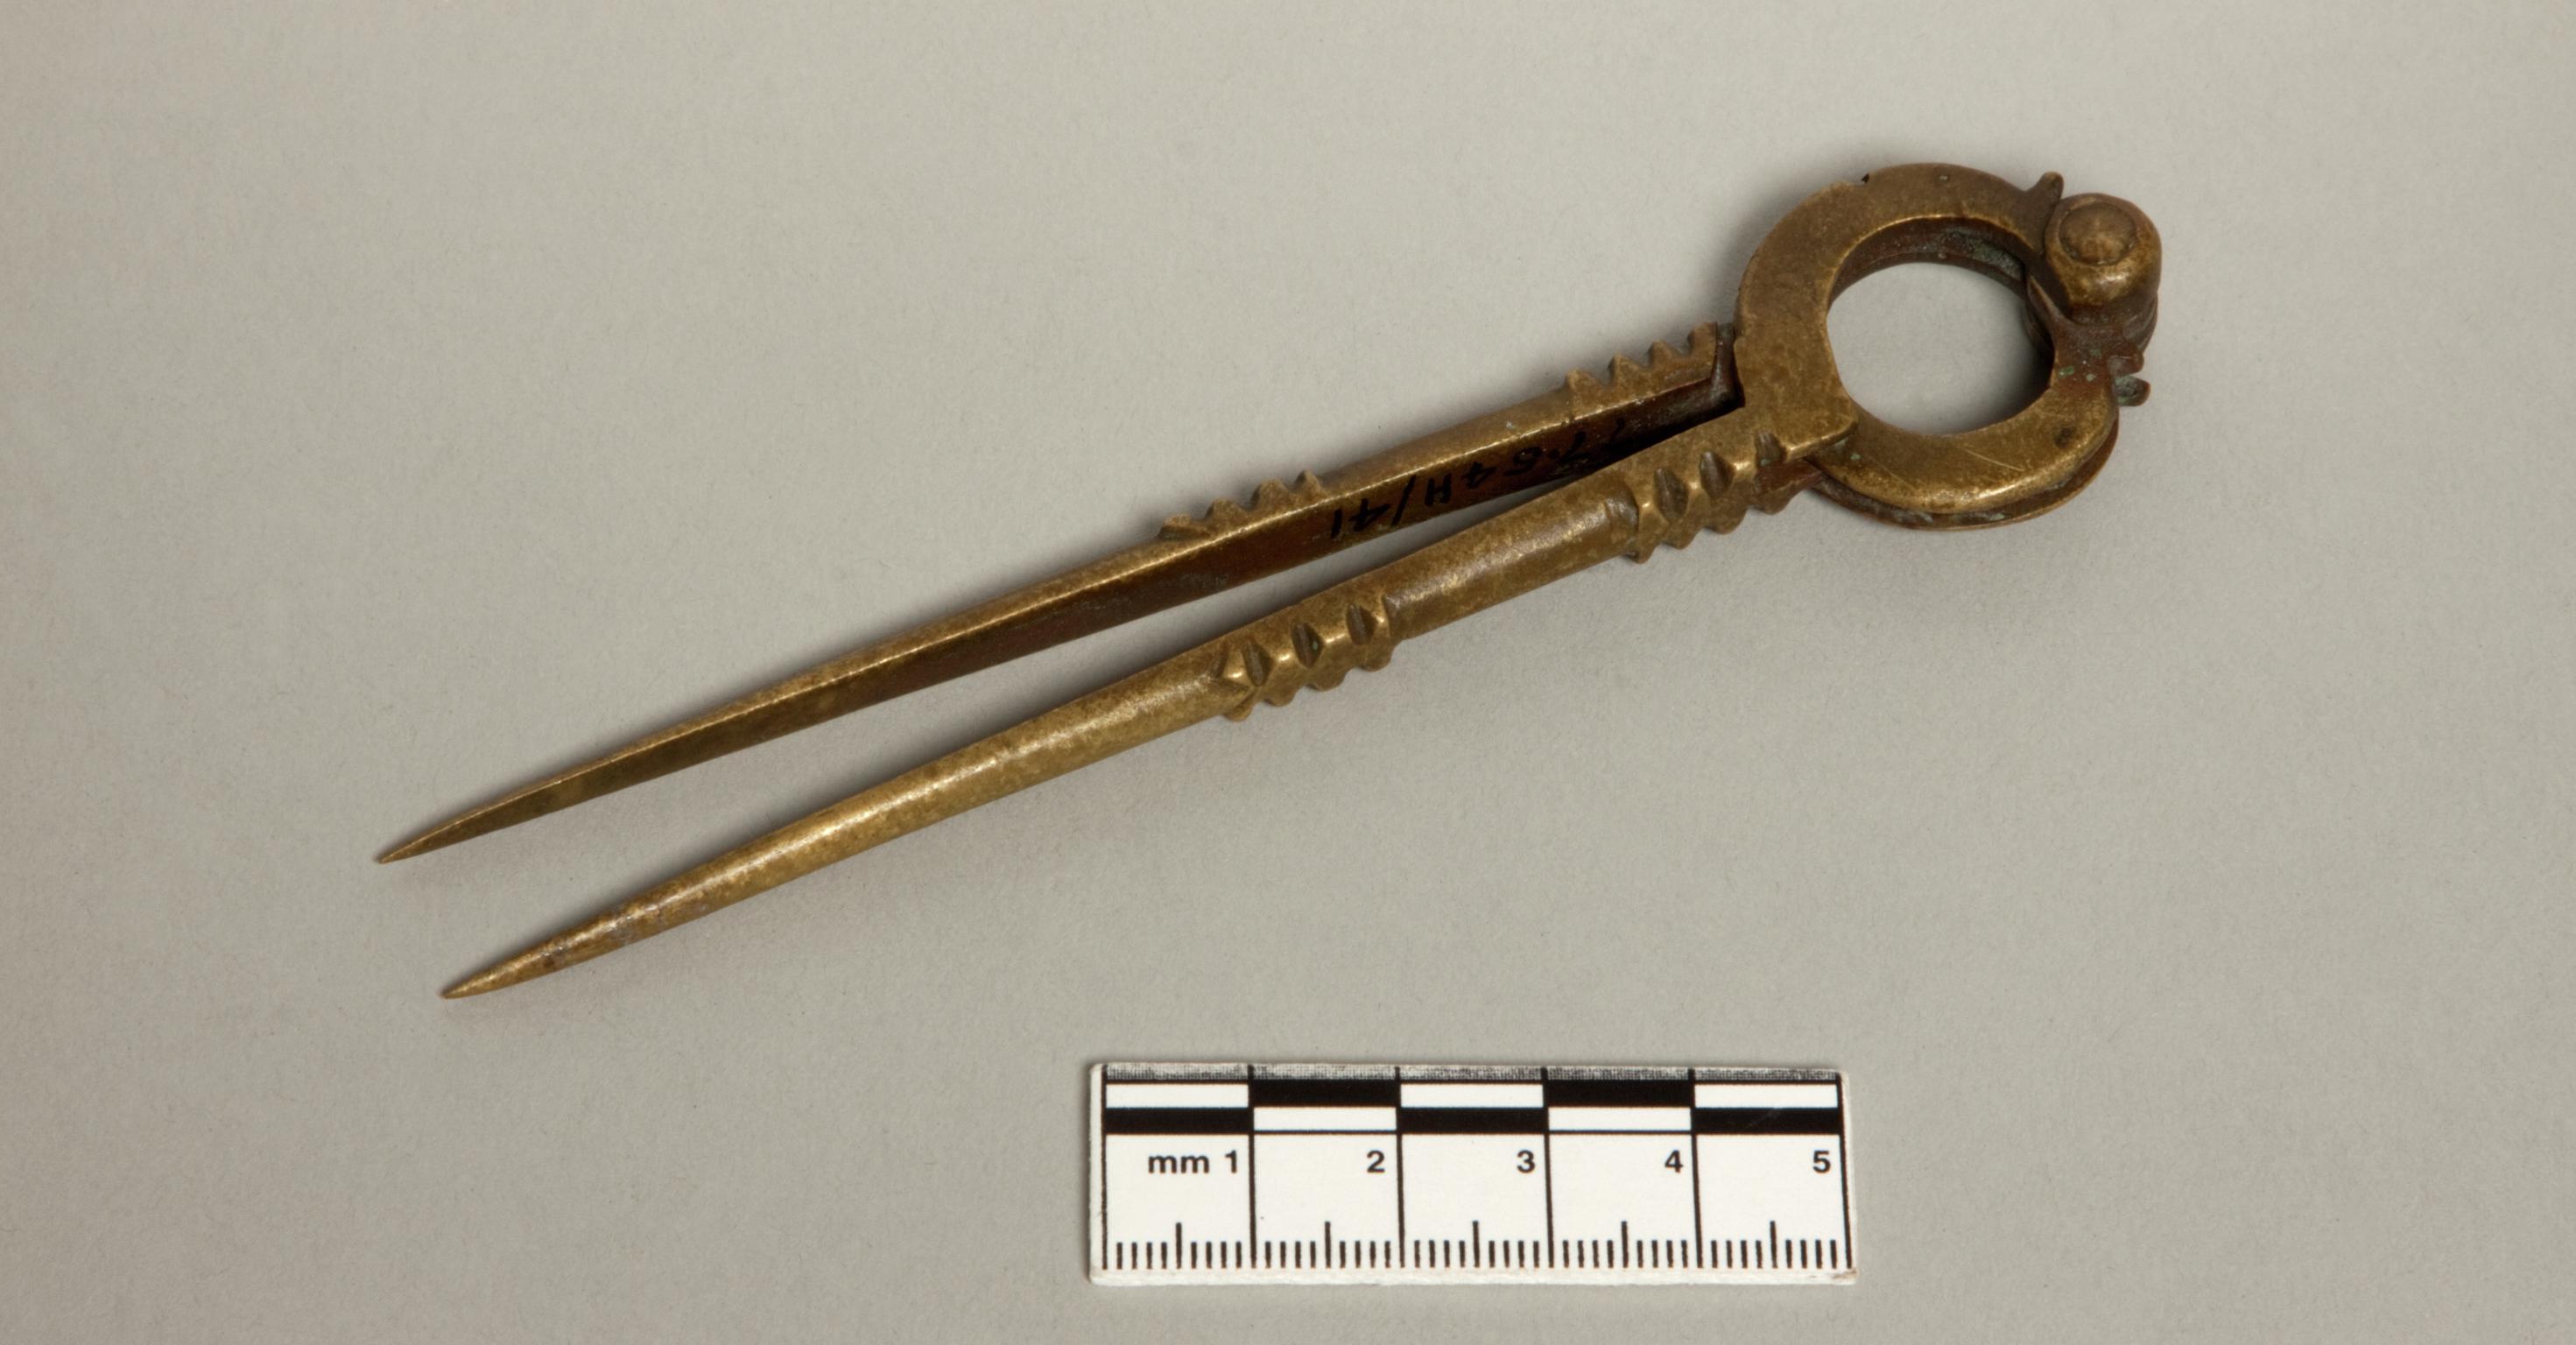 Post-Medieval copper alloy navigational dividers